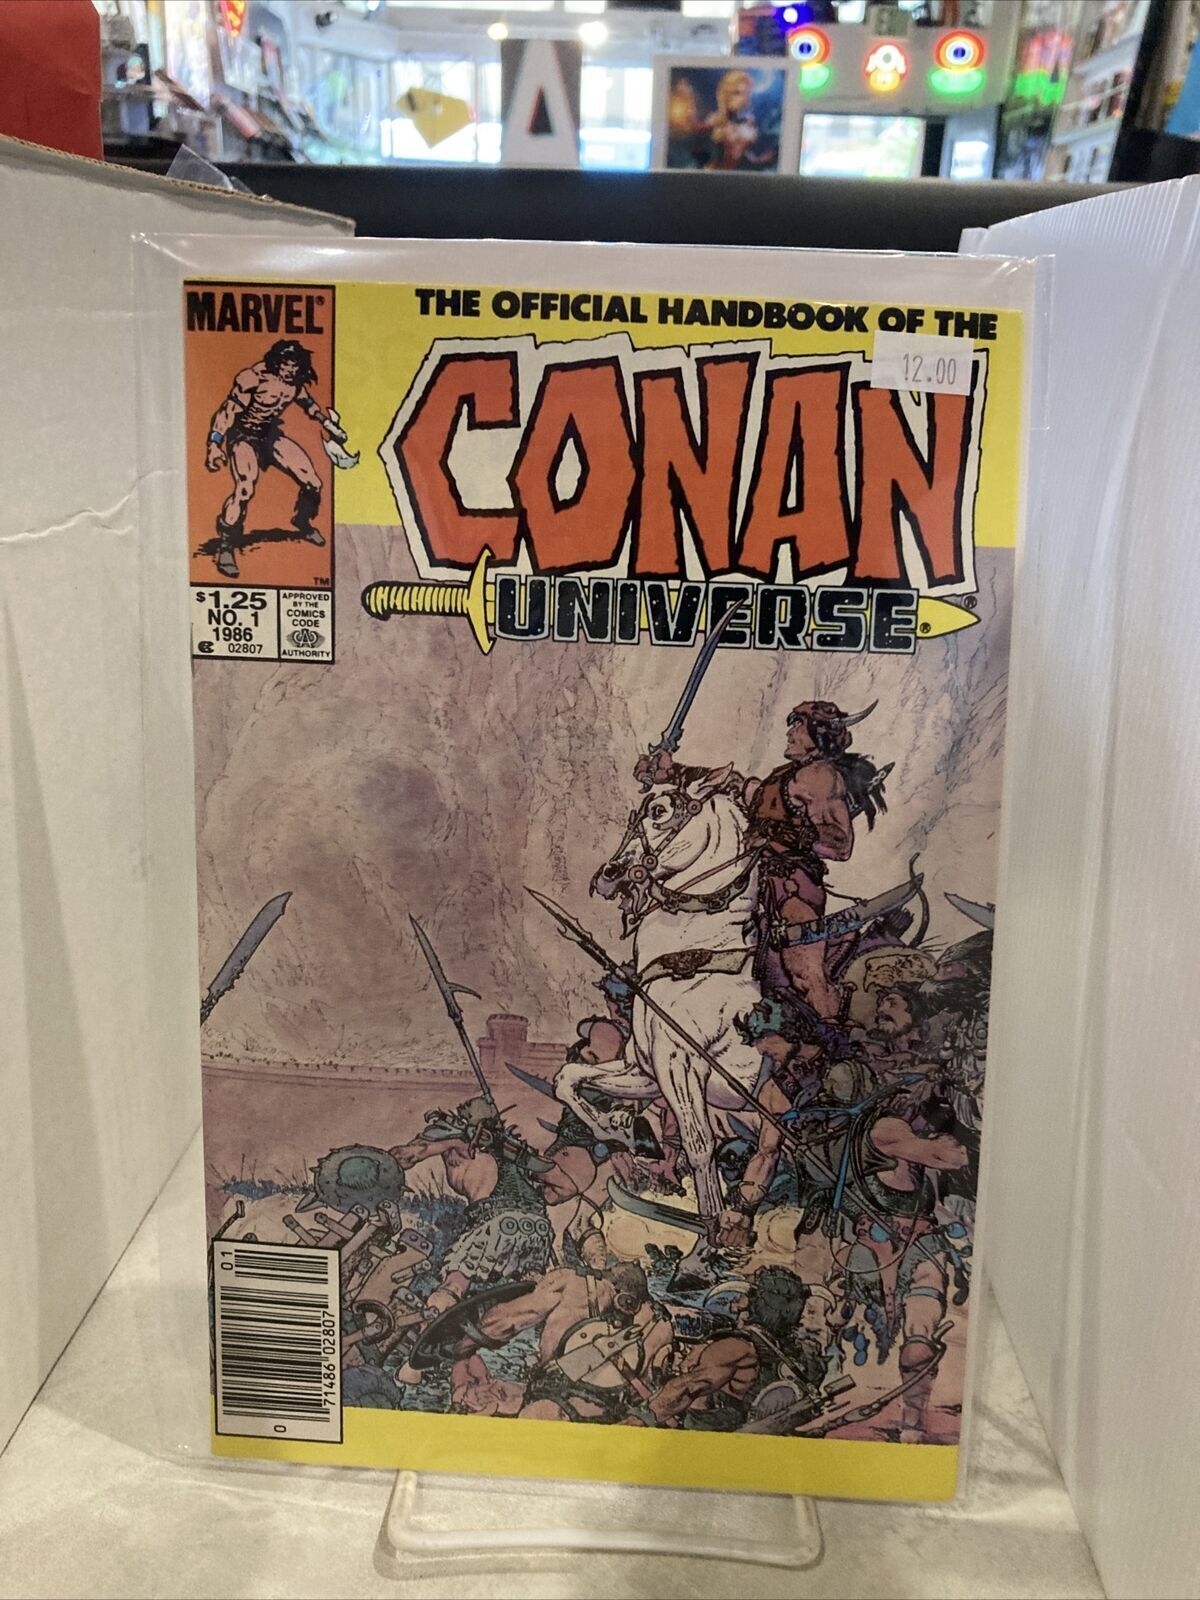 The Official Handbook Of The Conan Universe #1 Marvel 1986